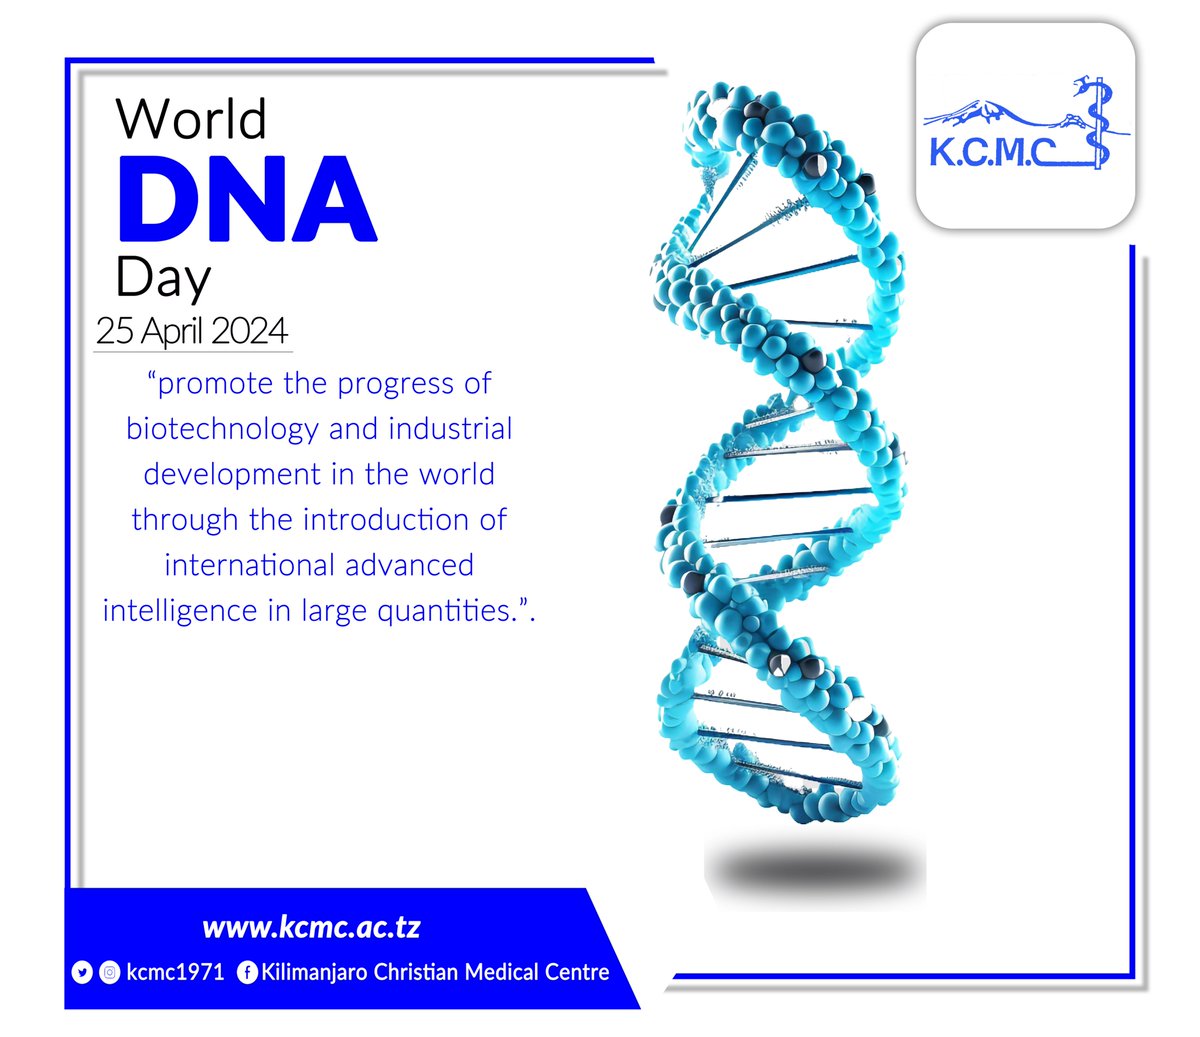 World DNA Day 2024
#worlddnaday2024 
#worlddnaday